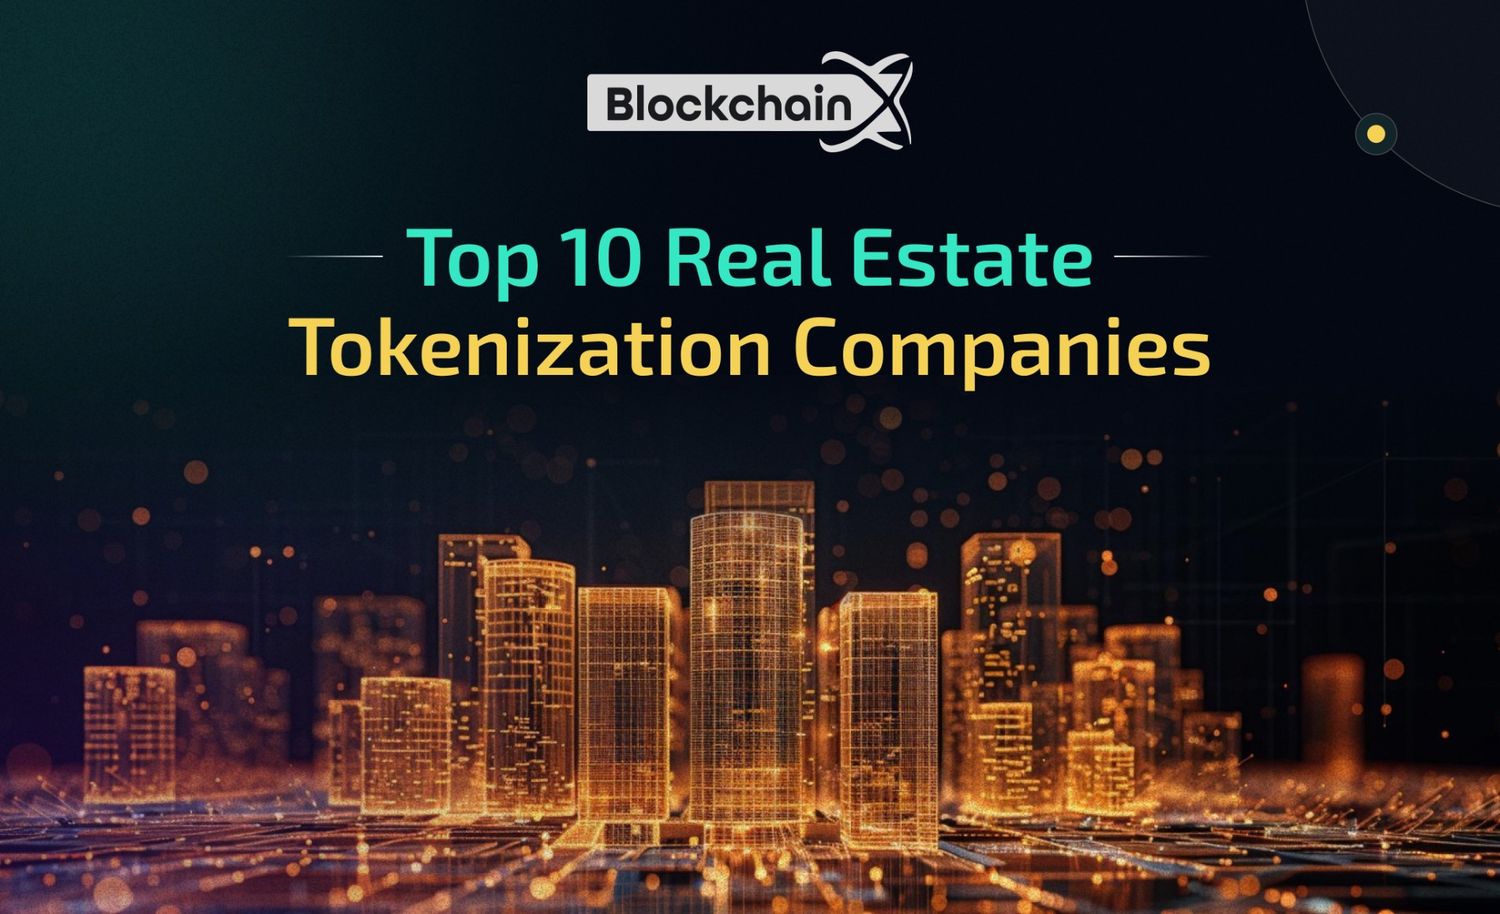 Top 10 Real Estate Tokenization Companies